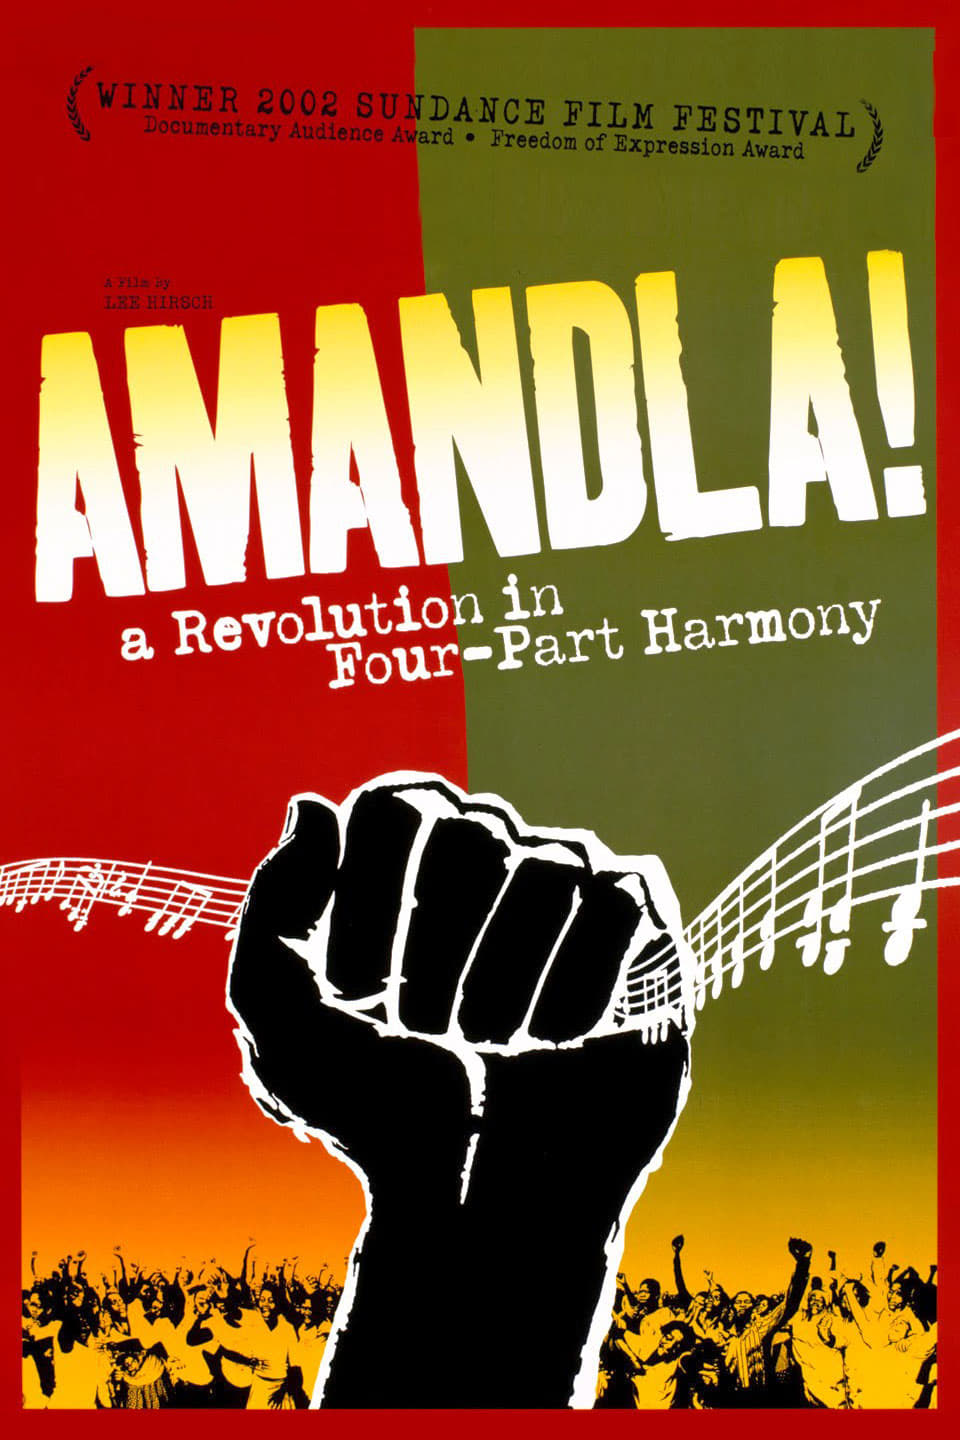 AMANDLA!: A REVOLUTION IN FOUR-PART HARMONY